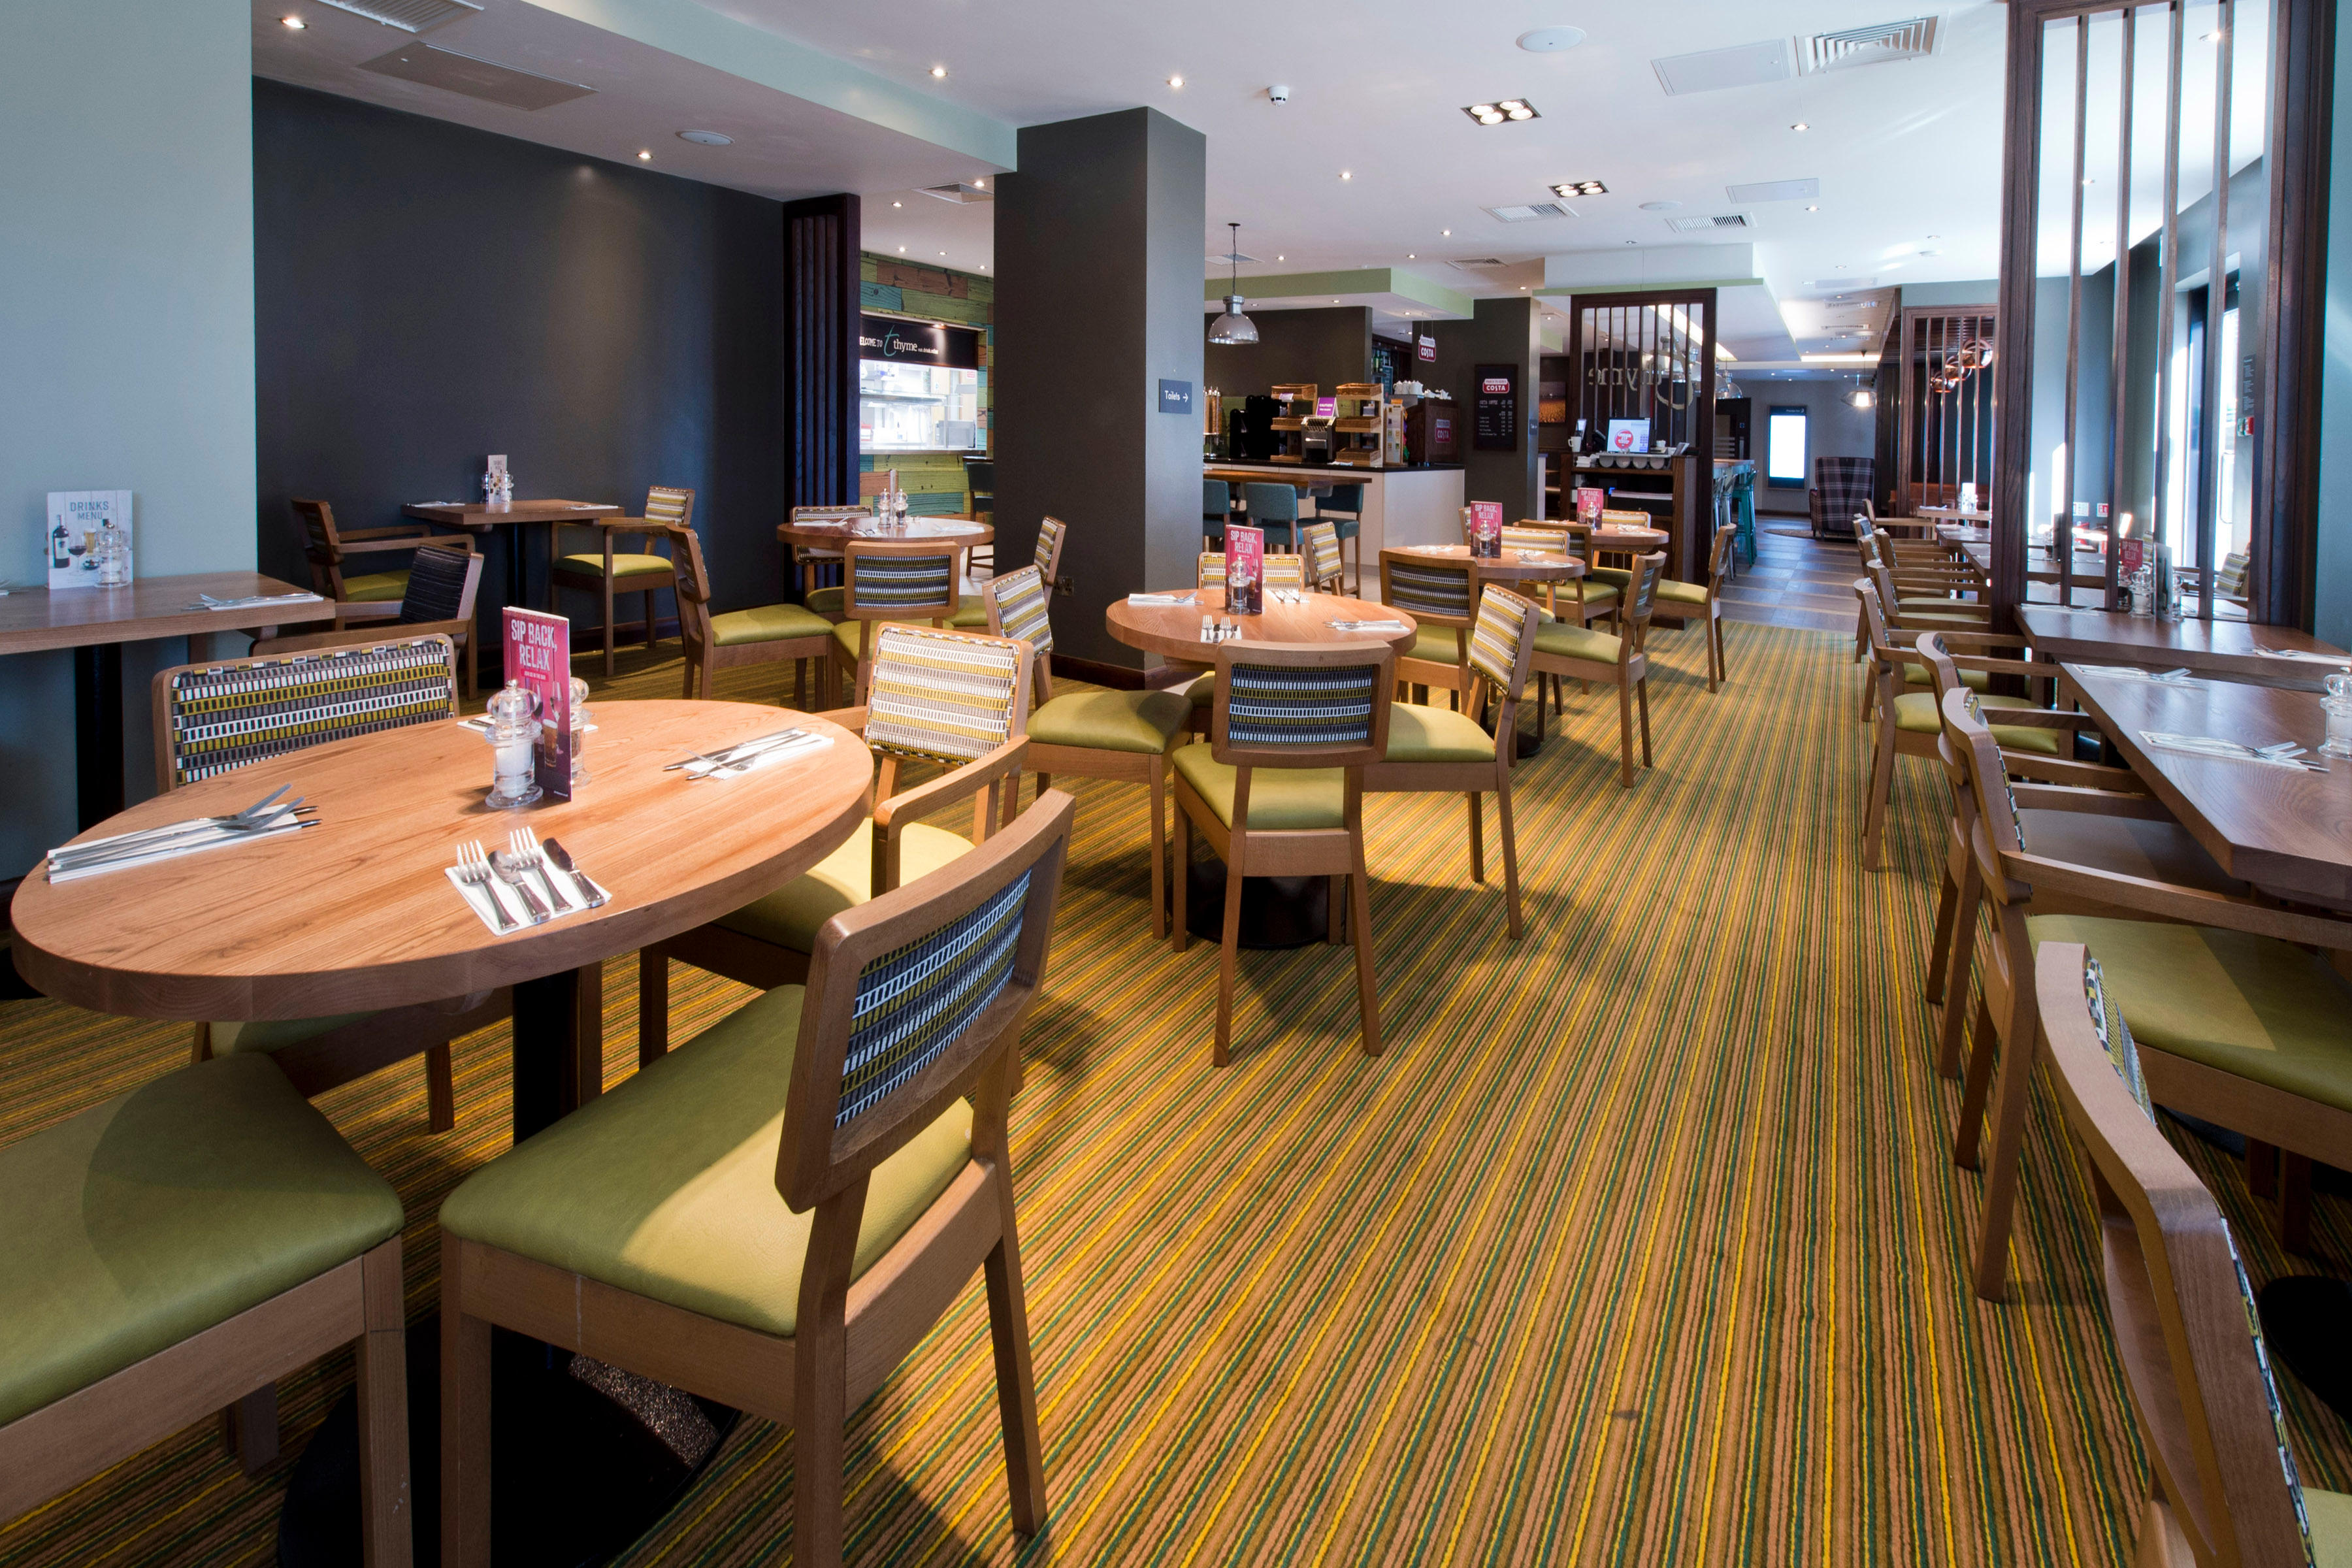 Thyme restaurant interior Premier Inn Bournemouth East Cliff hotel Bournemouth 03332 346588